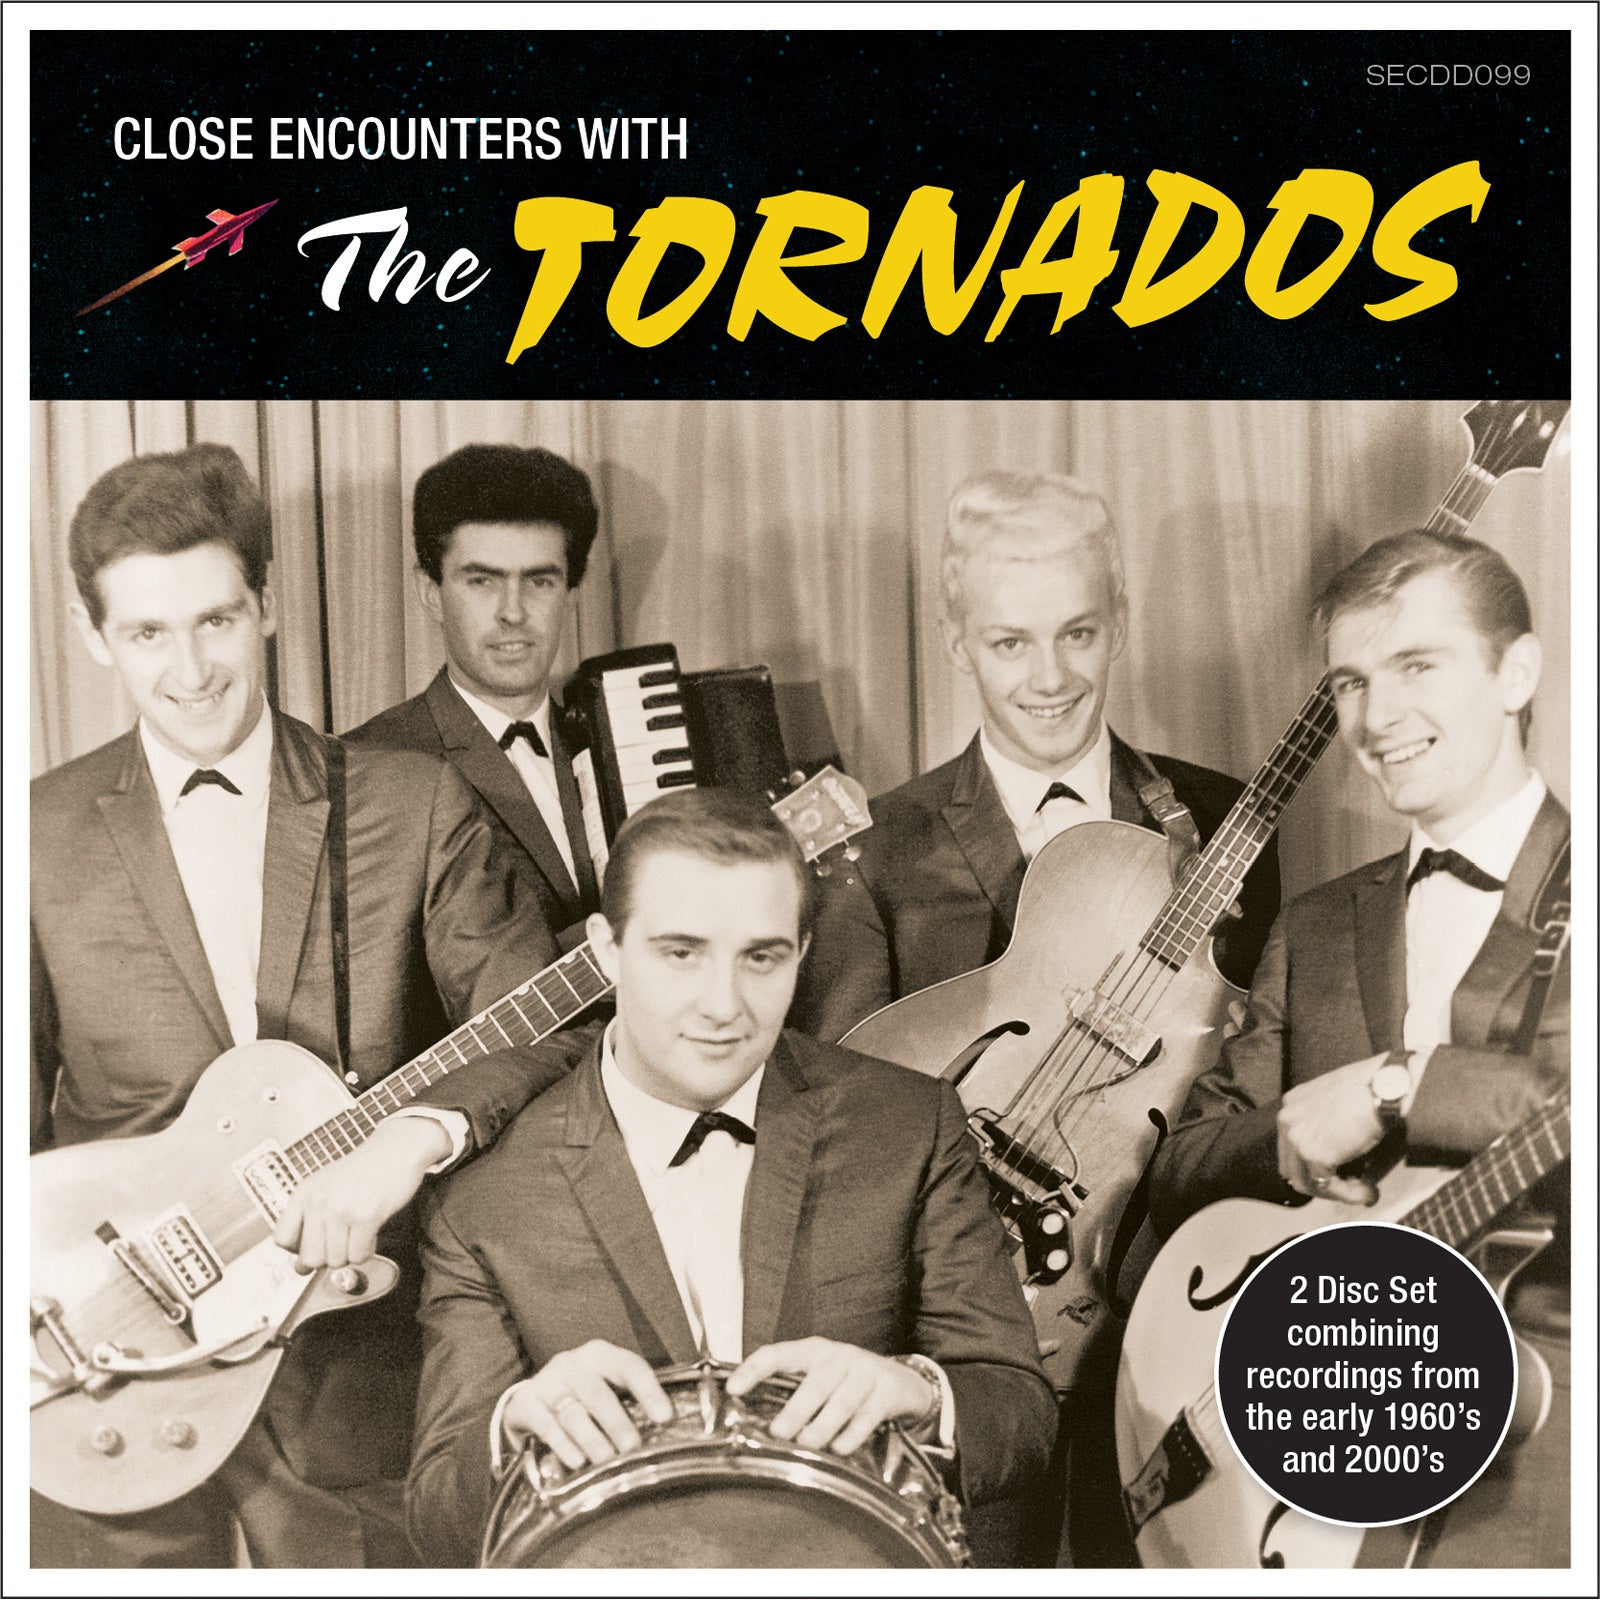 The Tornados - Close Encounters With The Tornados - 2CD Album - Secret Records Limited